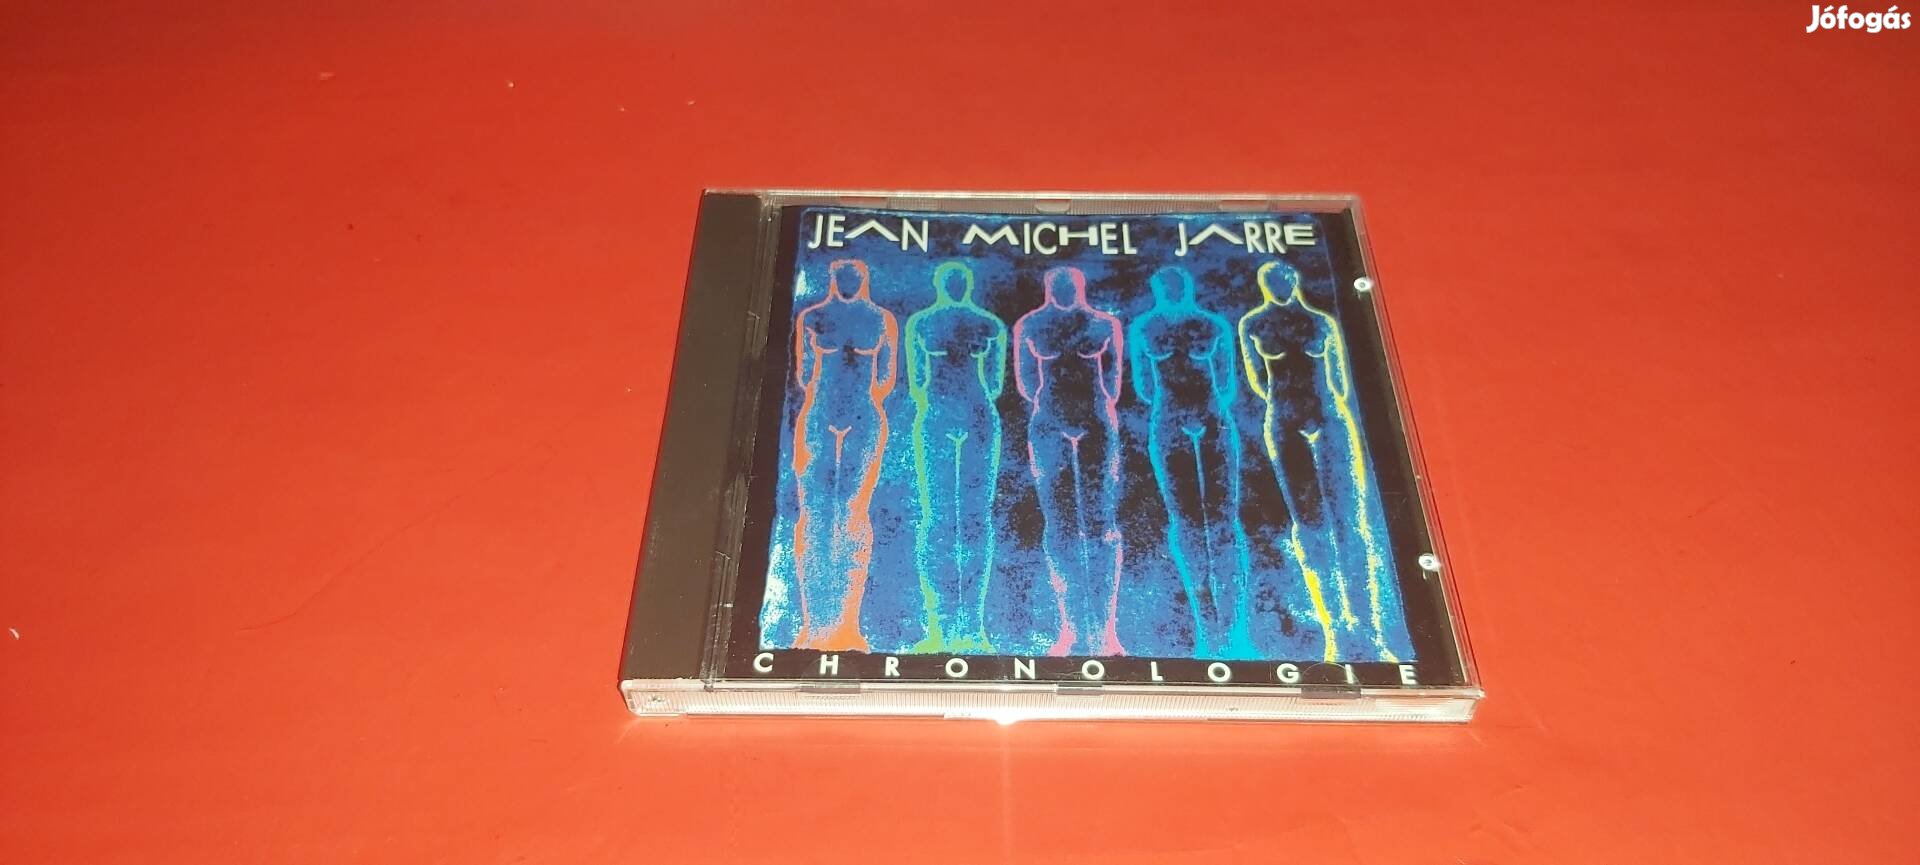 Jean Michel Jarre Chronologie Cd 1993 Francia